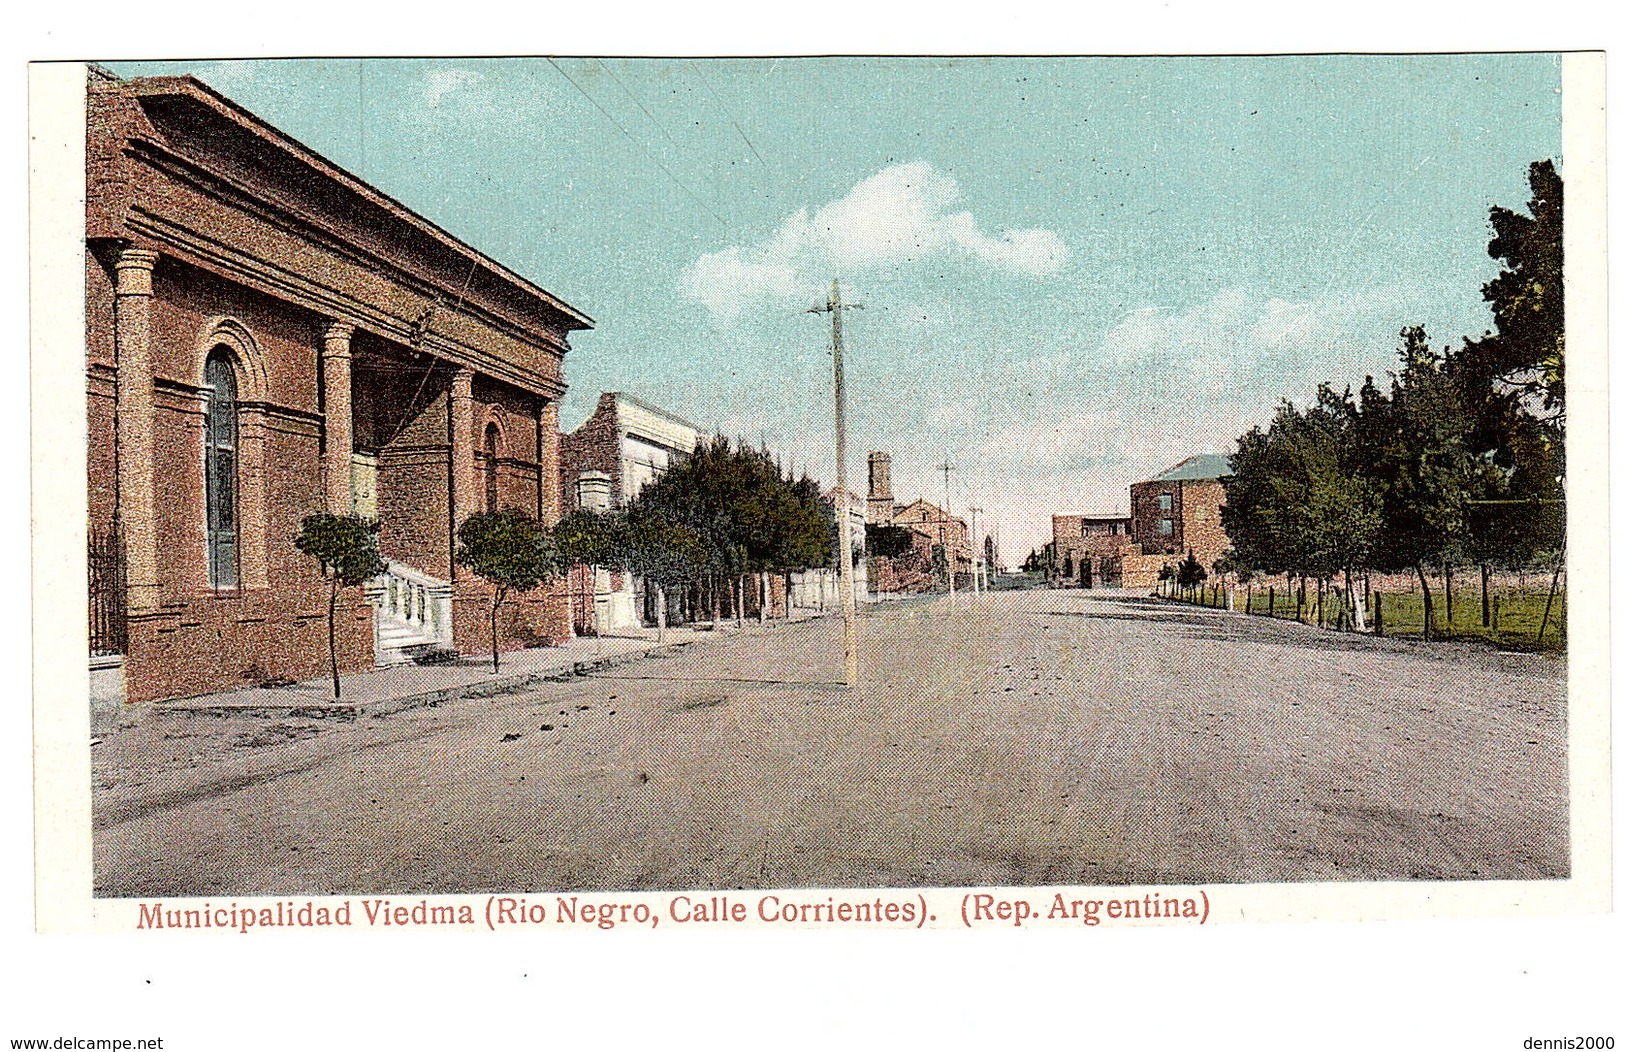 Municipalidad Viedma (Rio Negro, Calle Corrientes) - Argentina